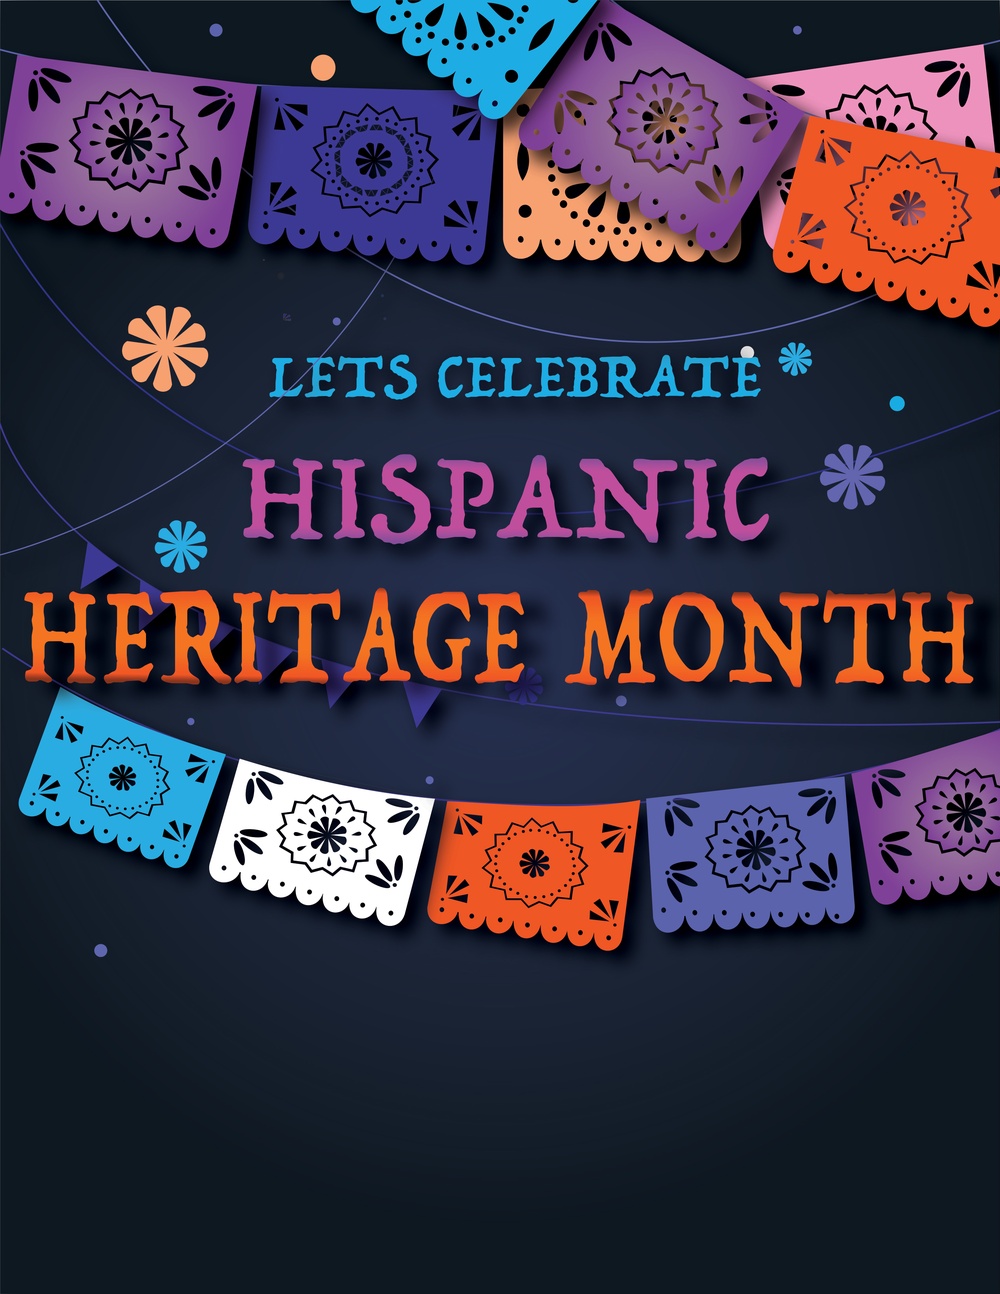 USS Carl Vinson Recognizes Hispanic Heritage Month